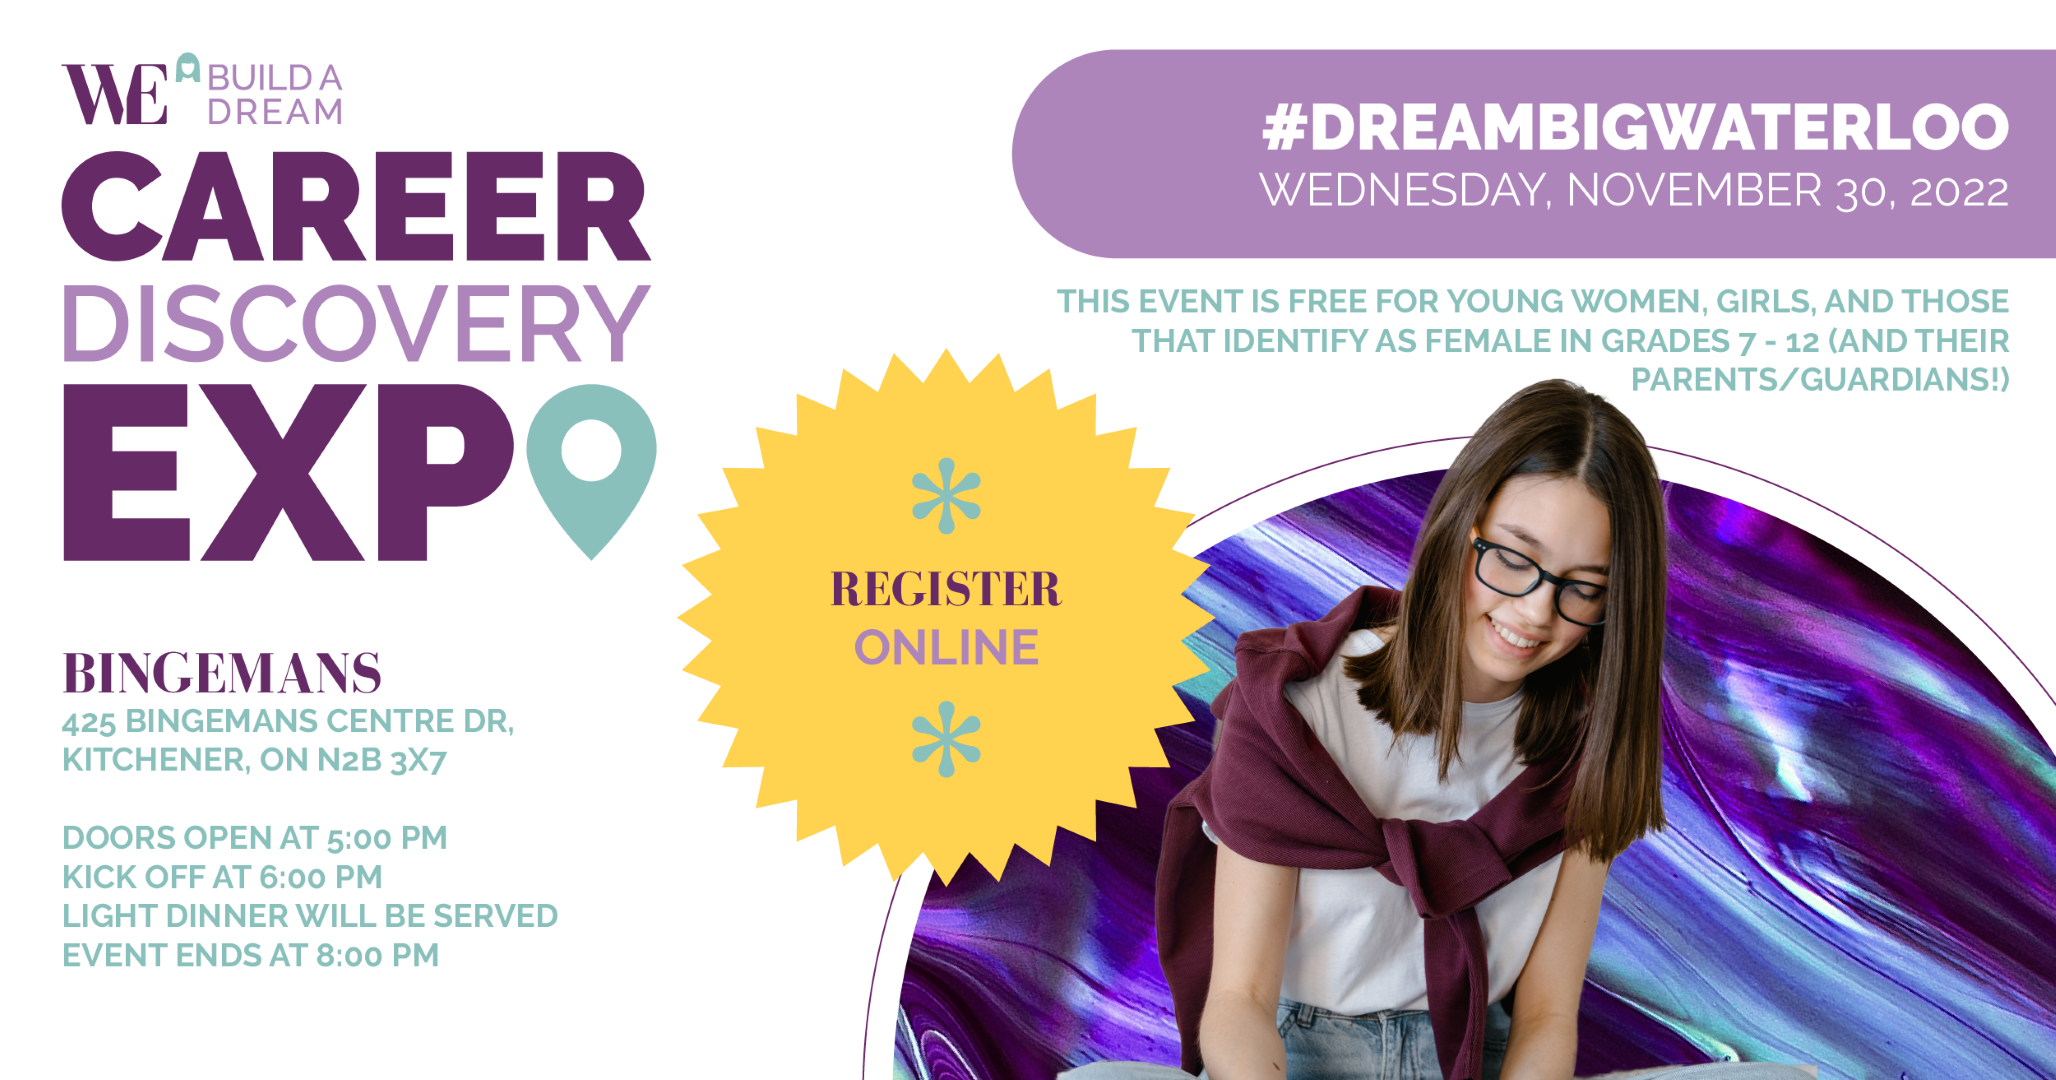 Build a Dream Career Discovery Expo